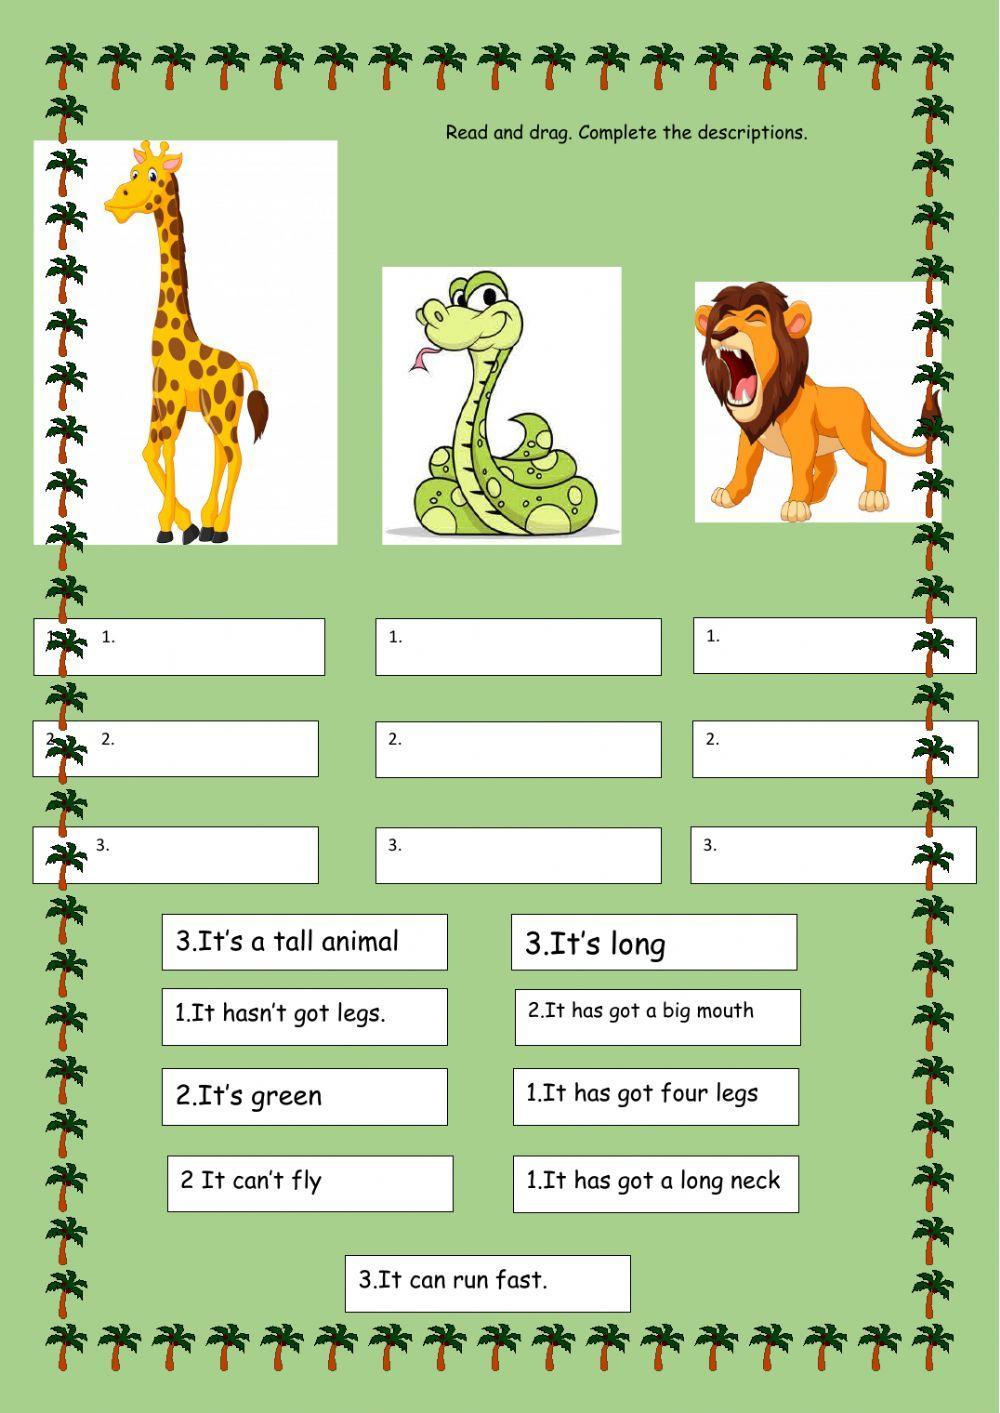 Wild animals descriptions